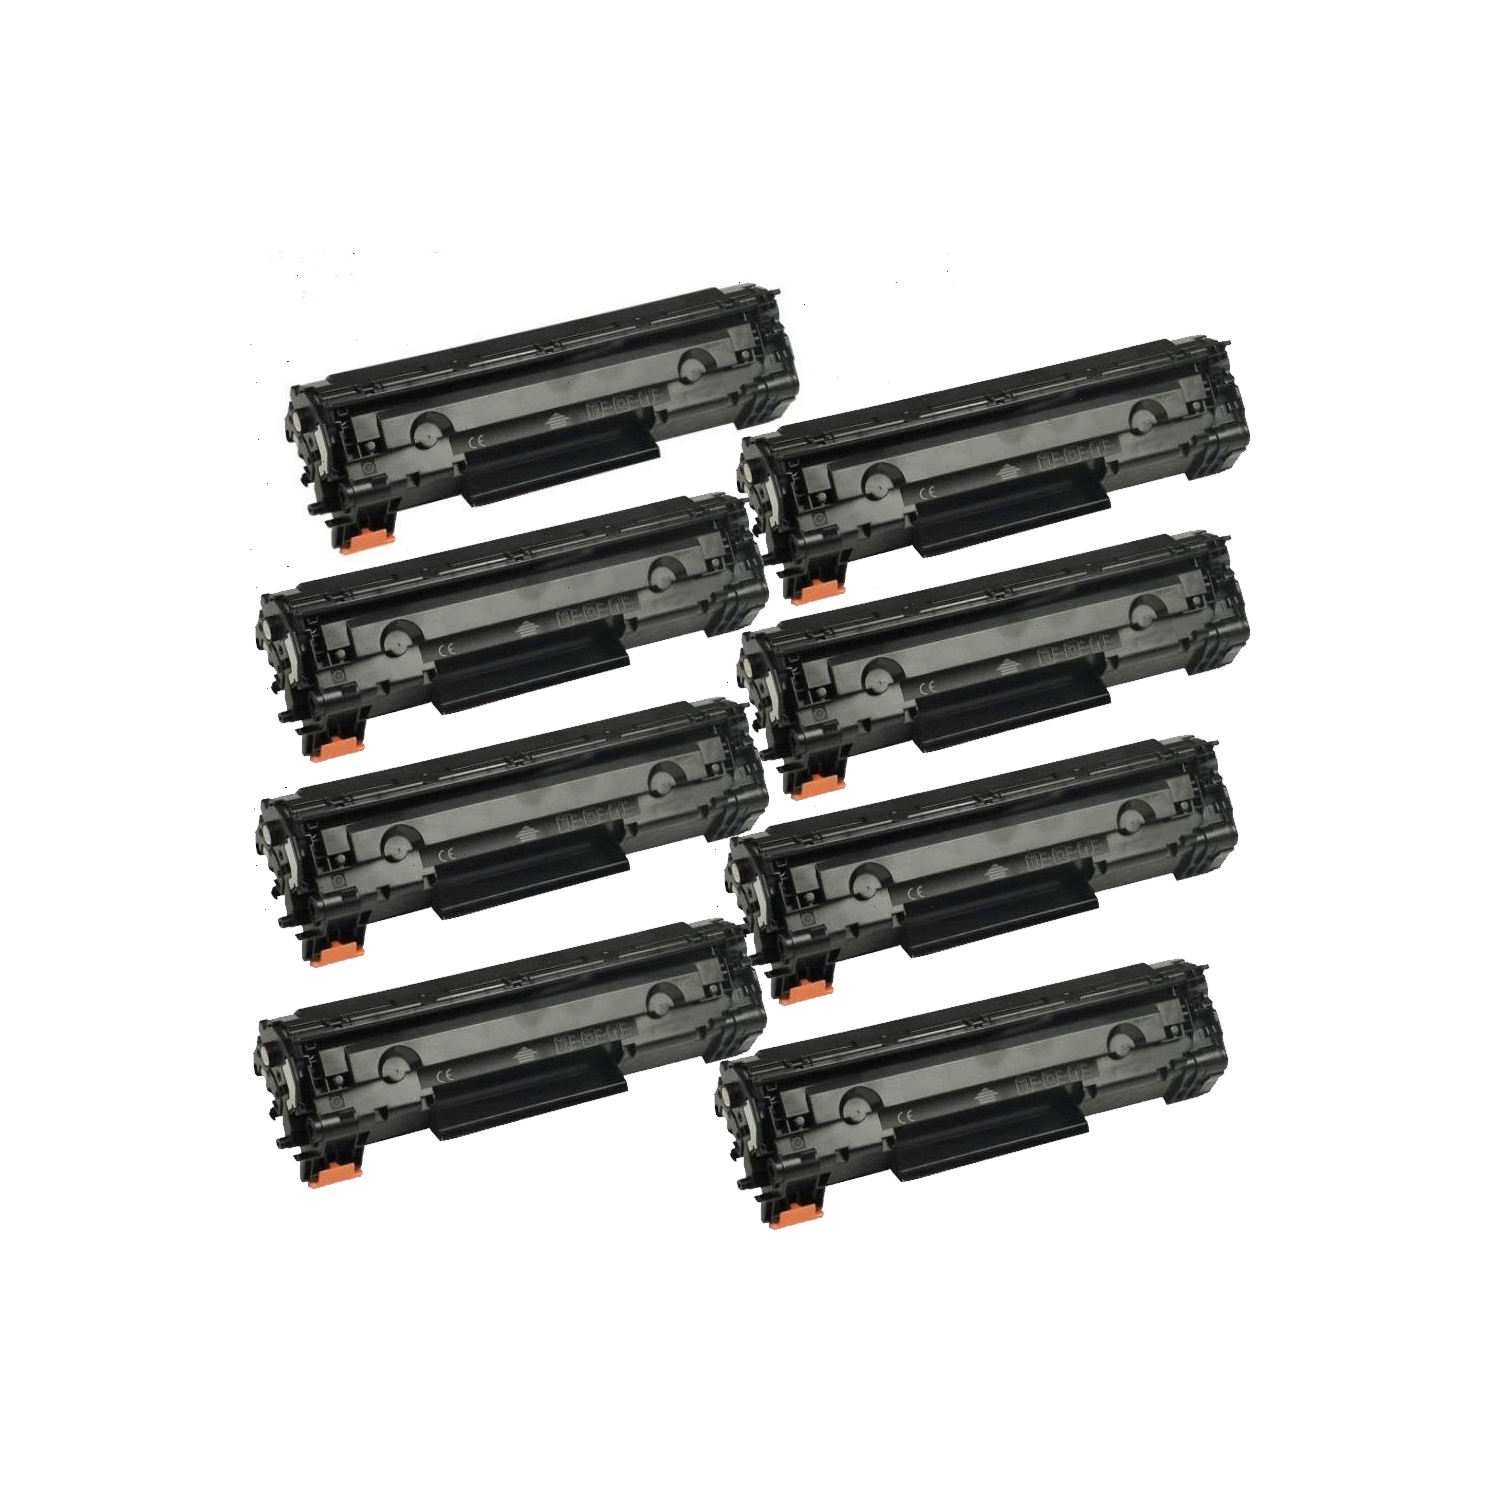 8Pk CF279A Toner Cartridge Compatible for HP 79A HP79A LaserJet Pro MFP M26a MFP M26nw M12a M12w